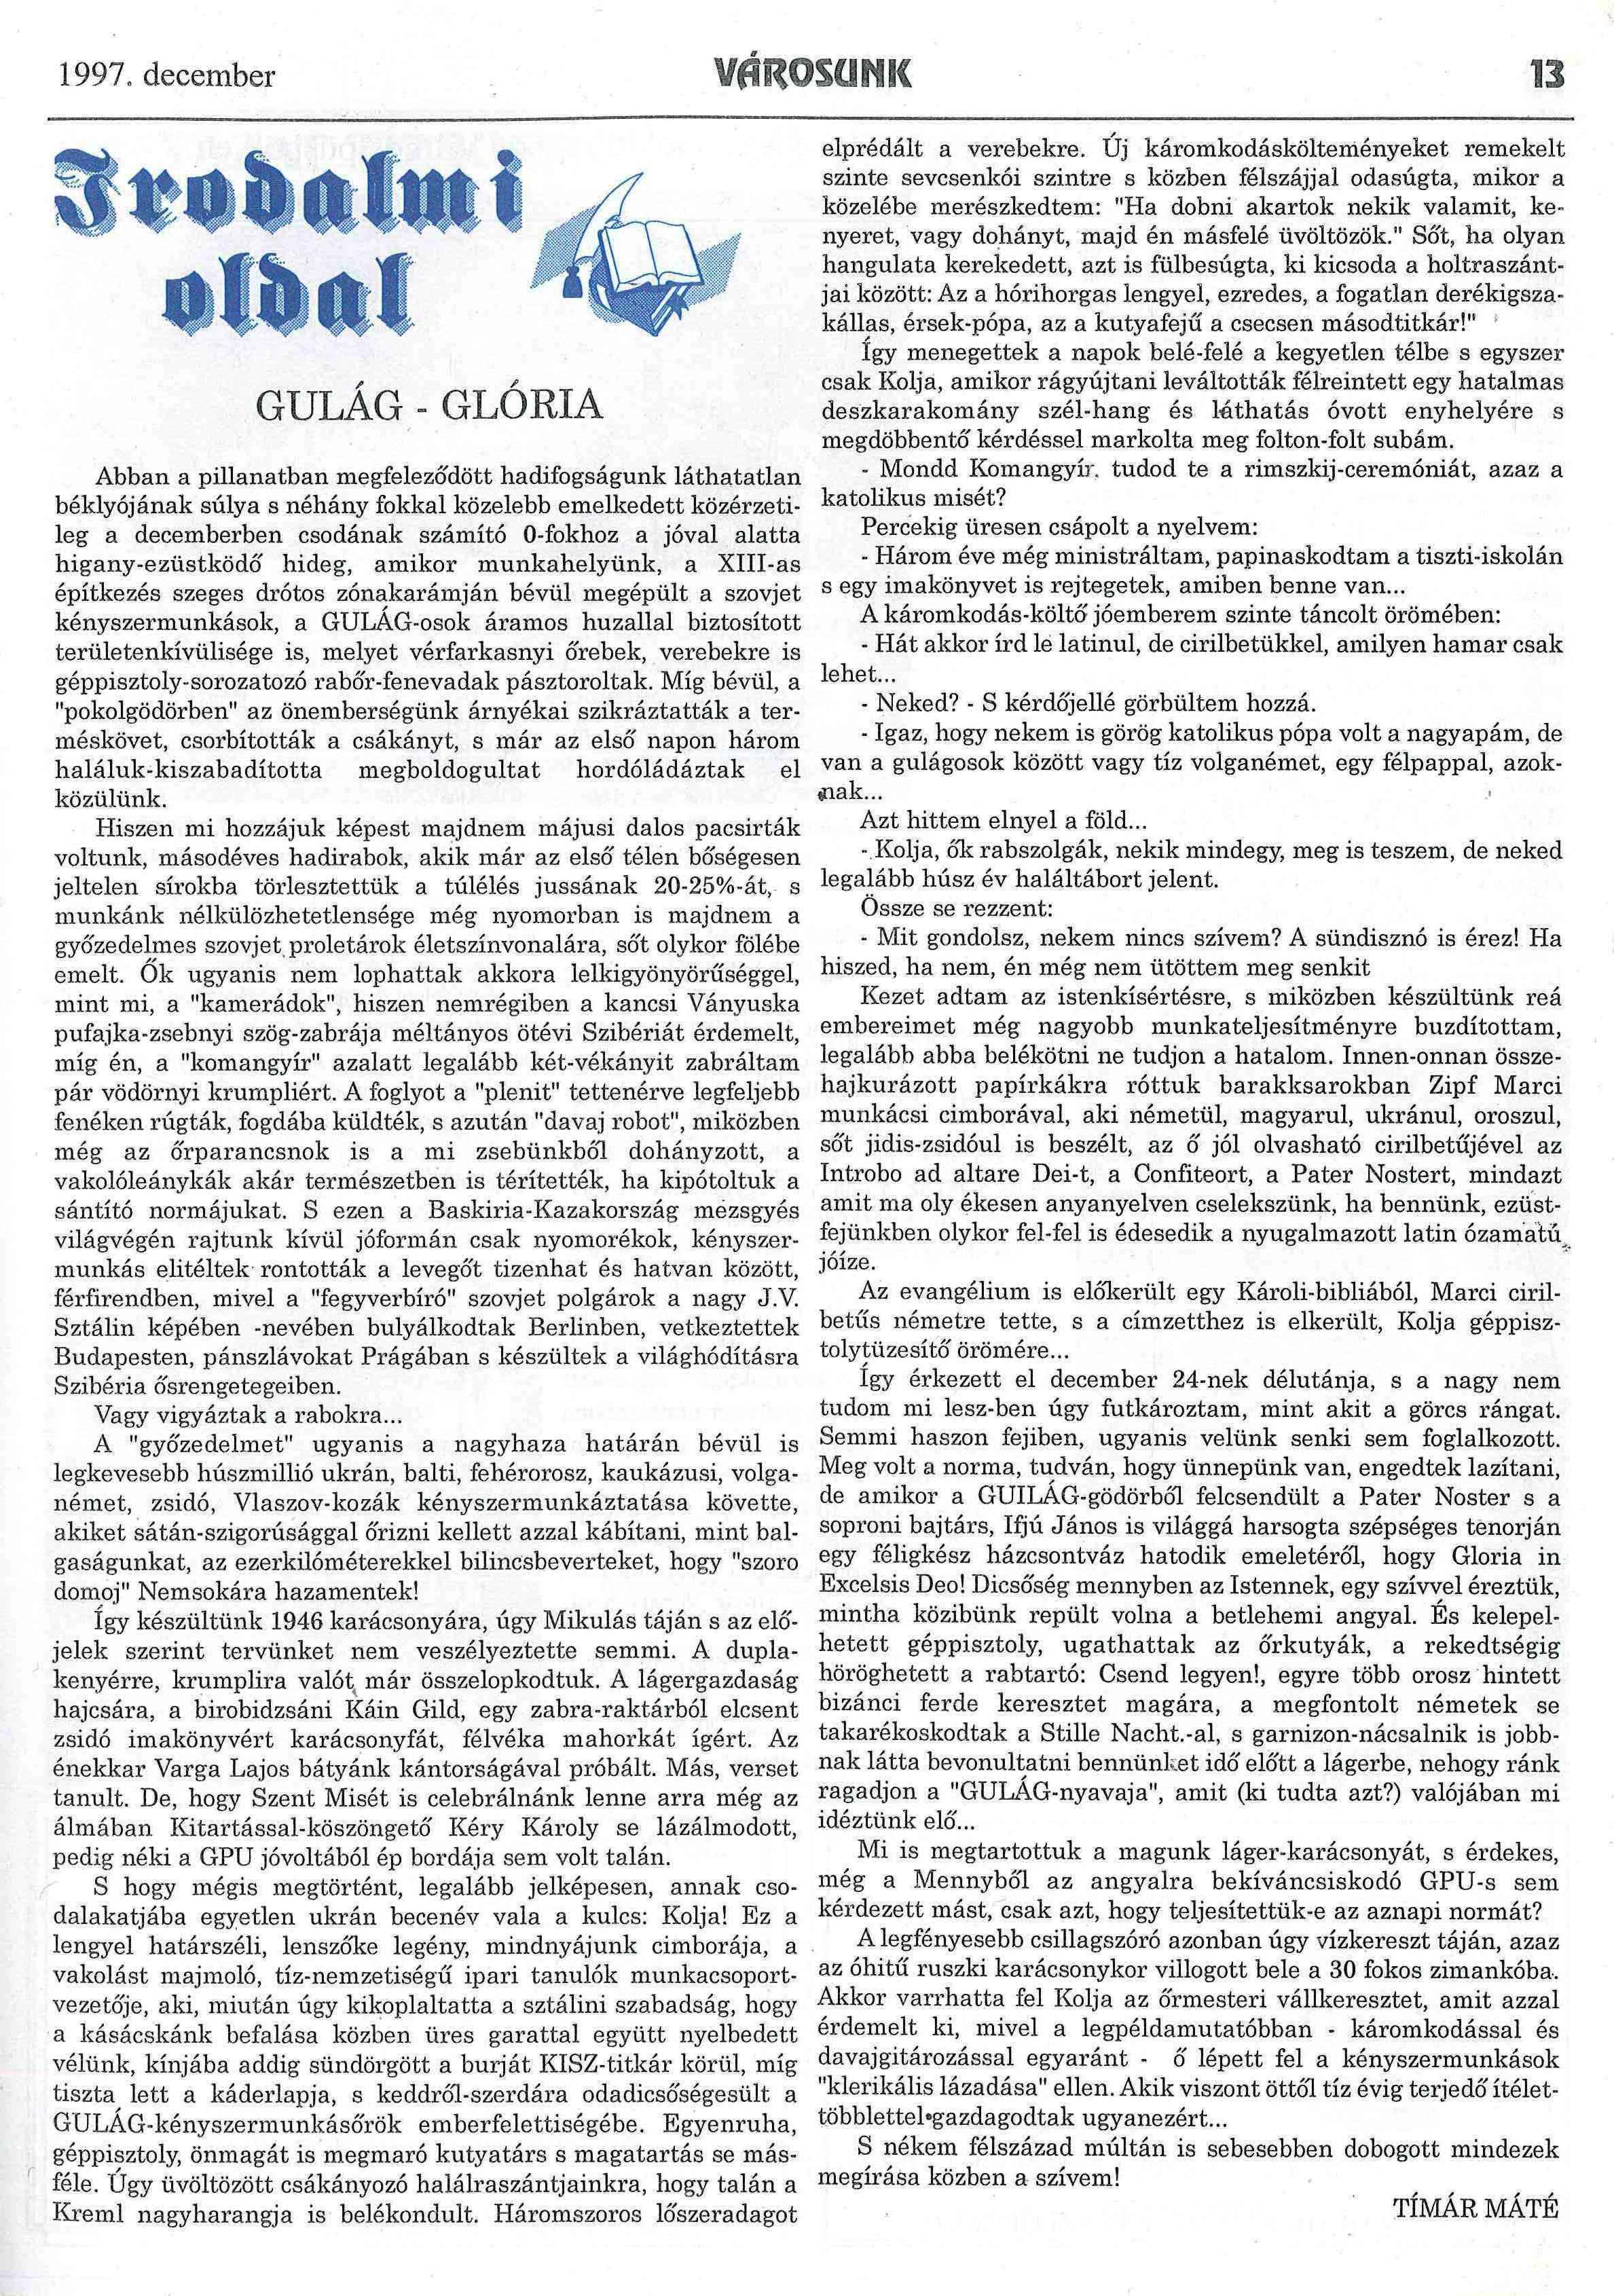 gulag gloria irasa varosunk 1997 12 13